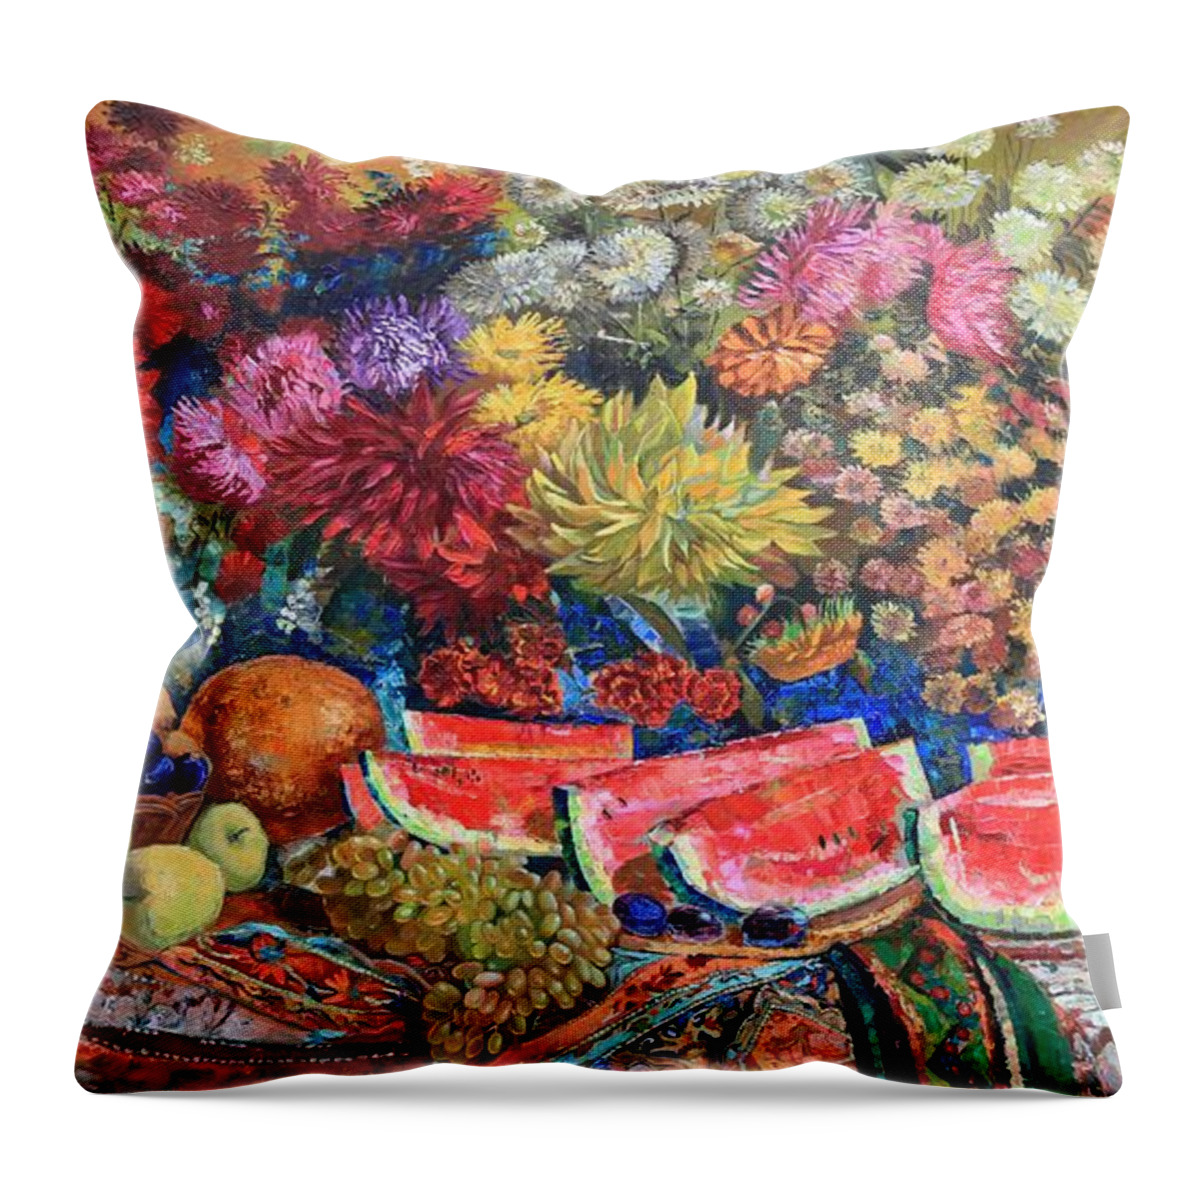 Maya Gusarina Throw Pillow featuring the painting Watermelon Symphony by Maya Gusarina